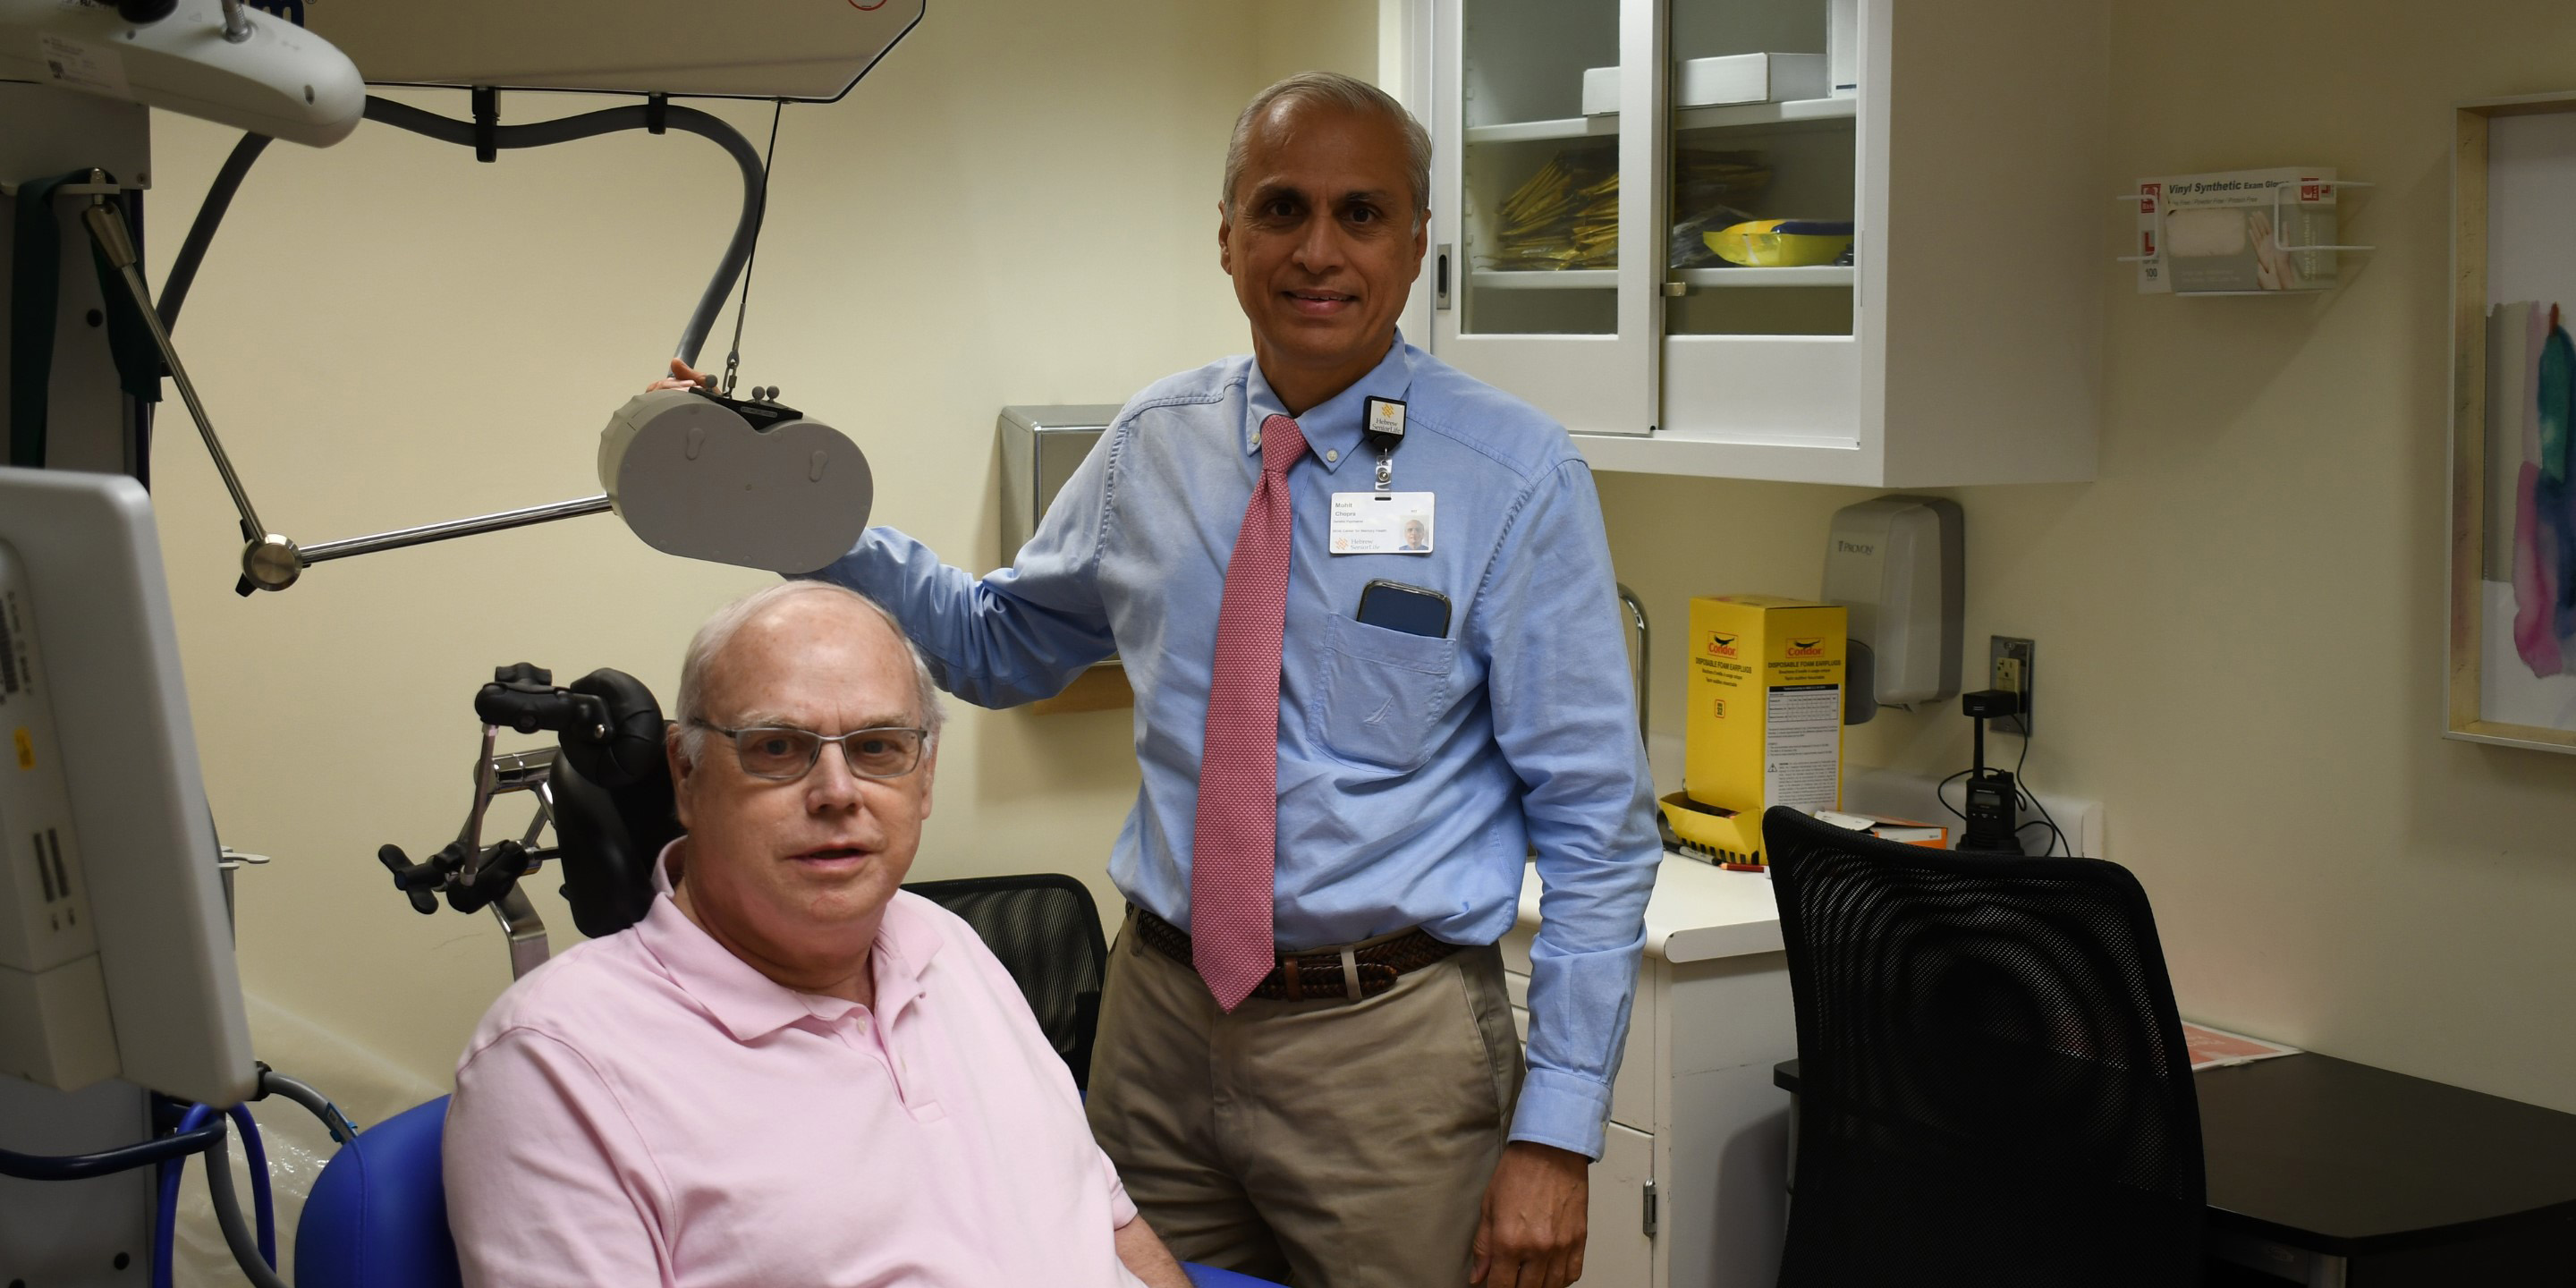 John Bengel with Dr. Chopra